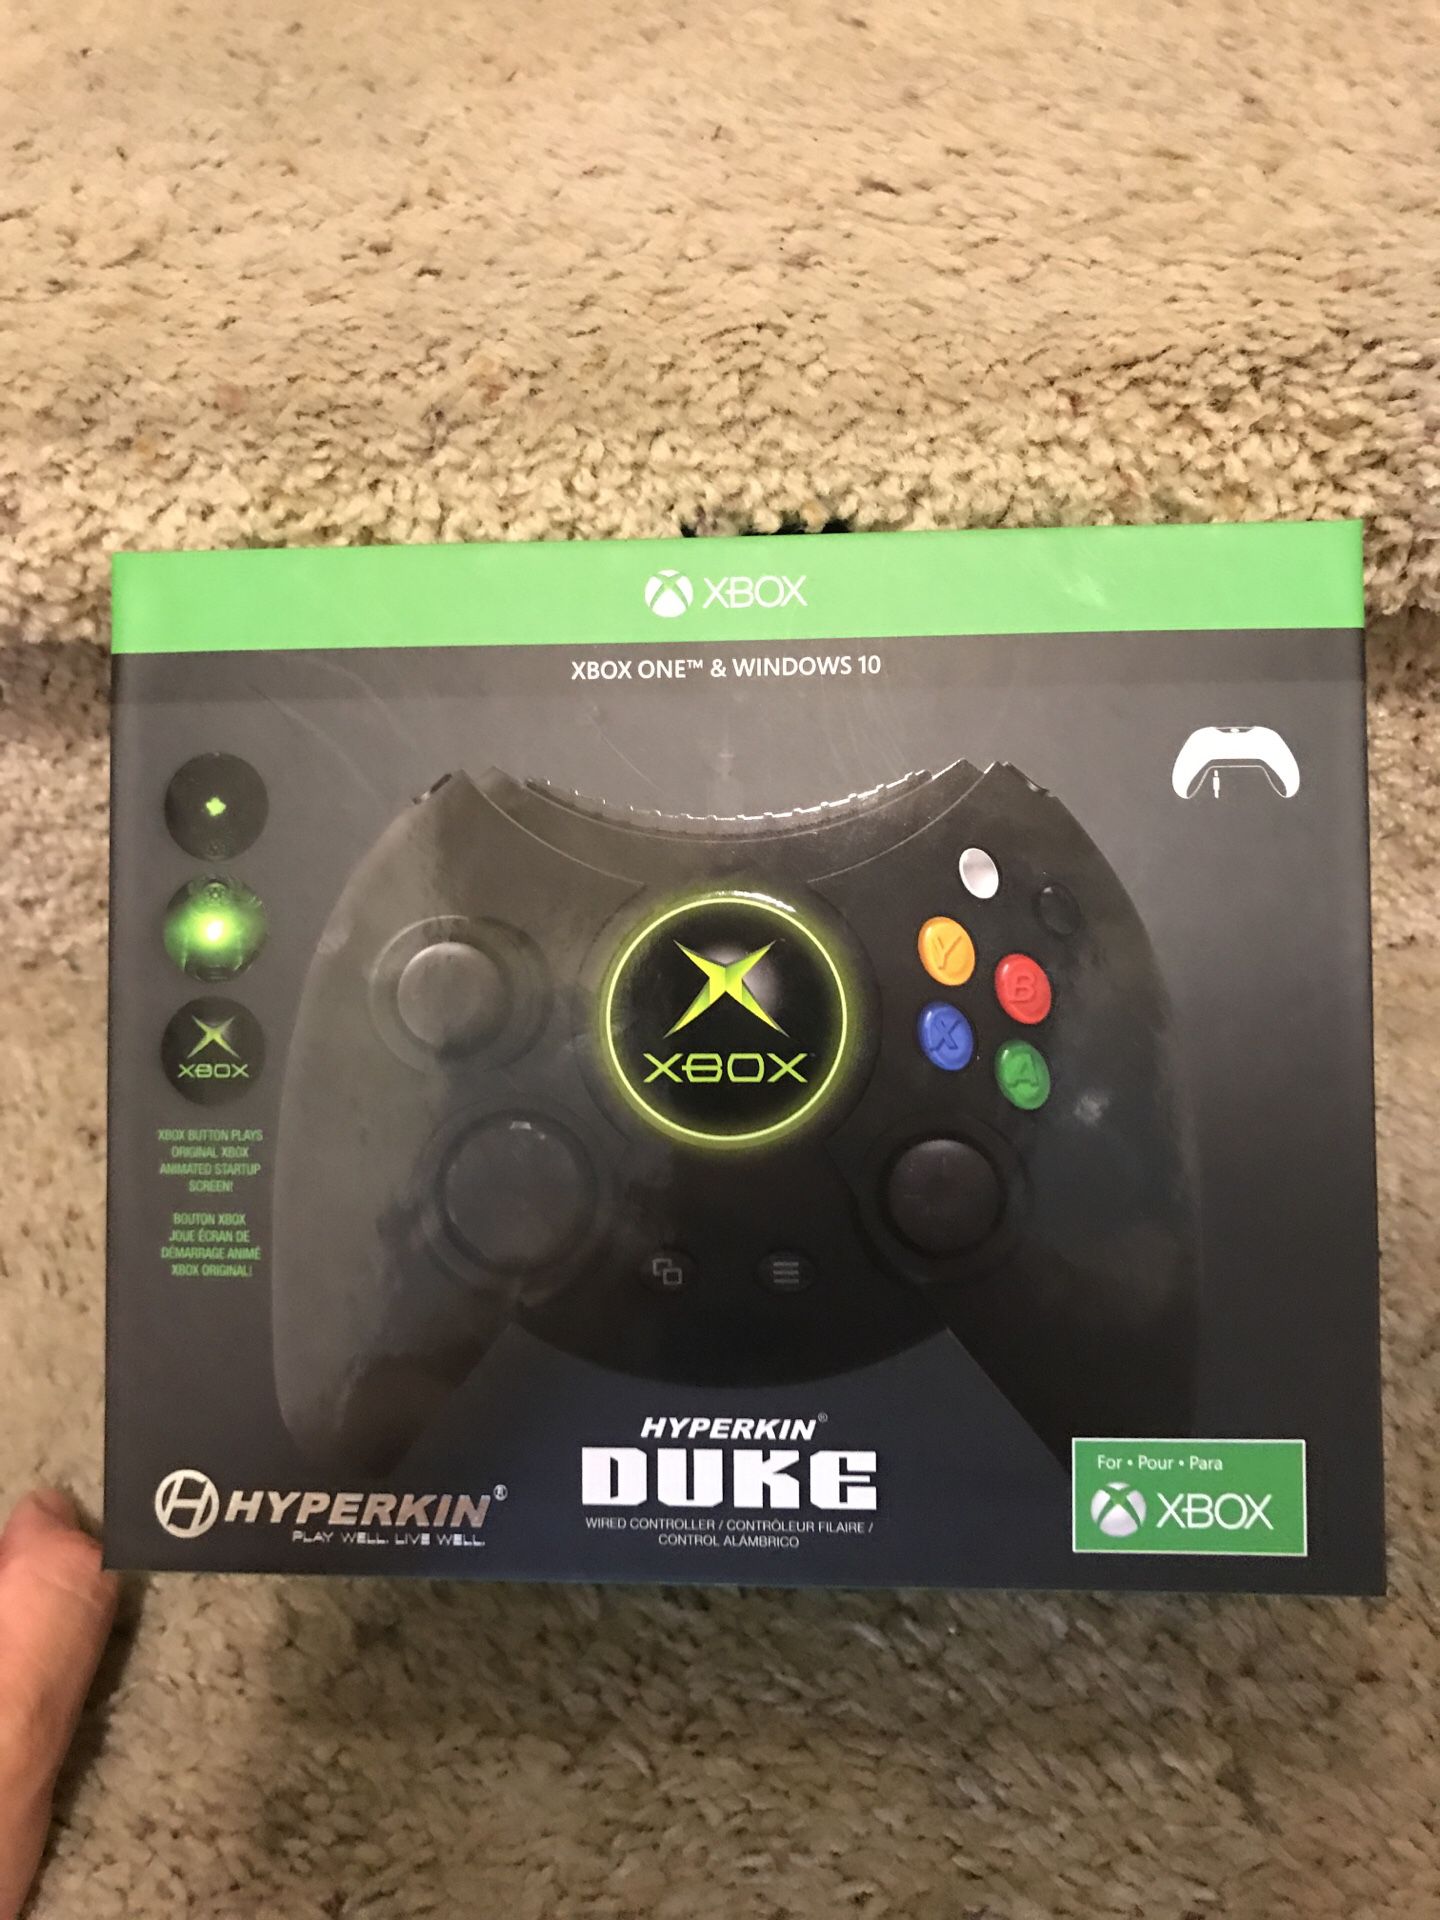 Bisagra estudiar farmacéutico Xbox one hyperkin duke controller for Sale in Santa Clarita, CA - OfferUp